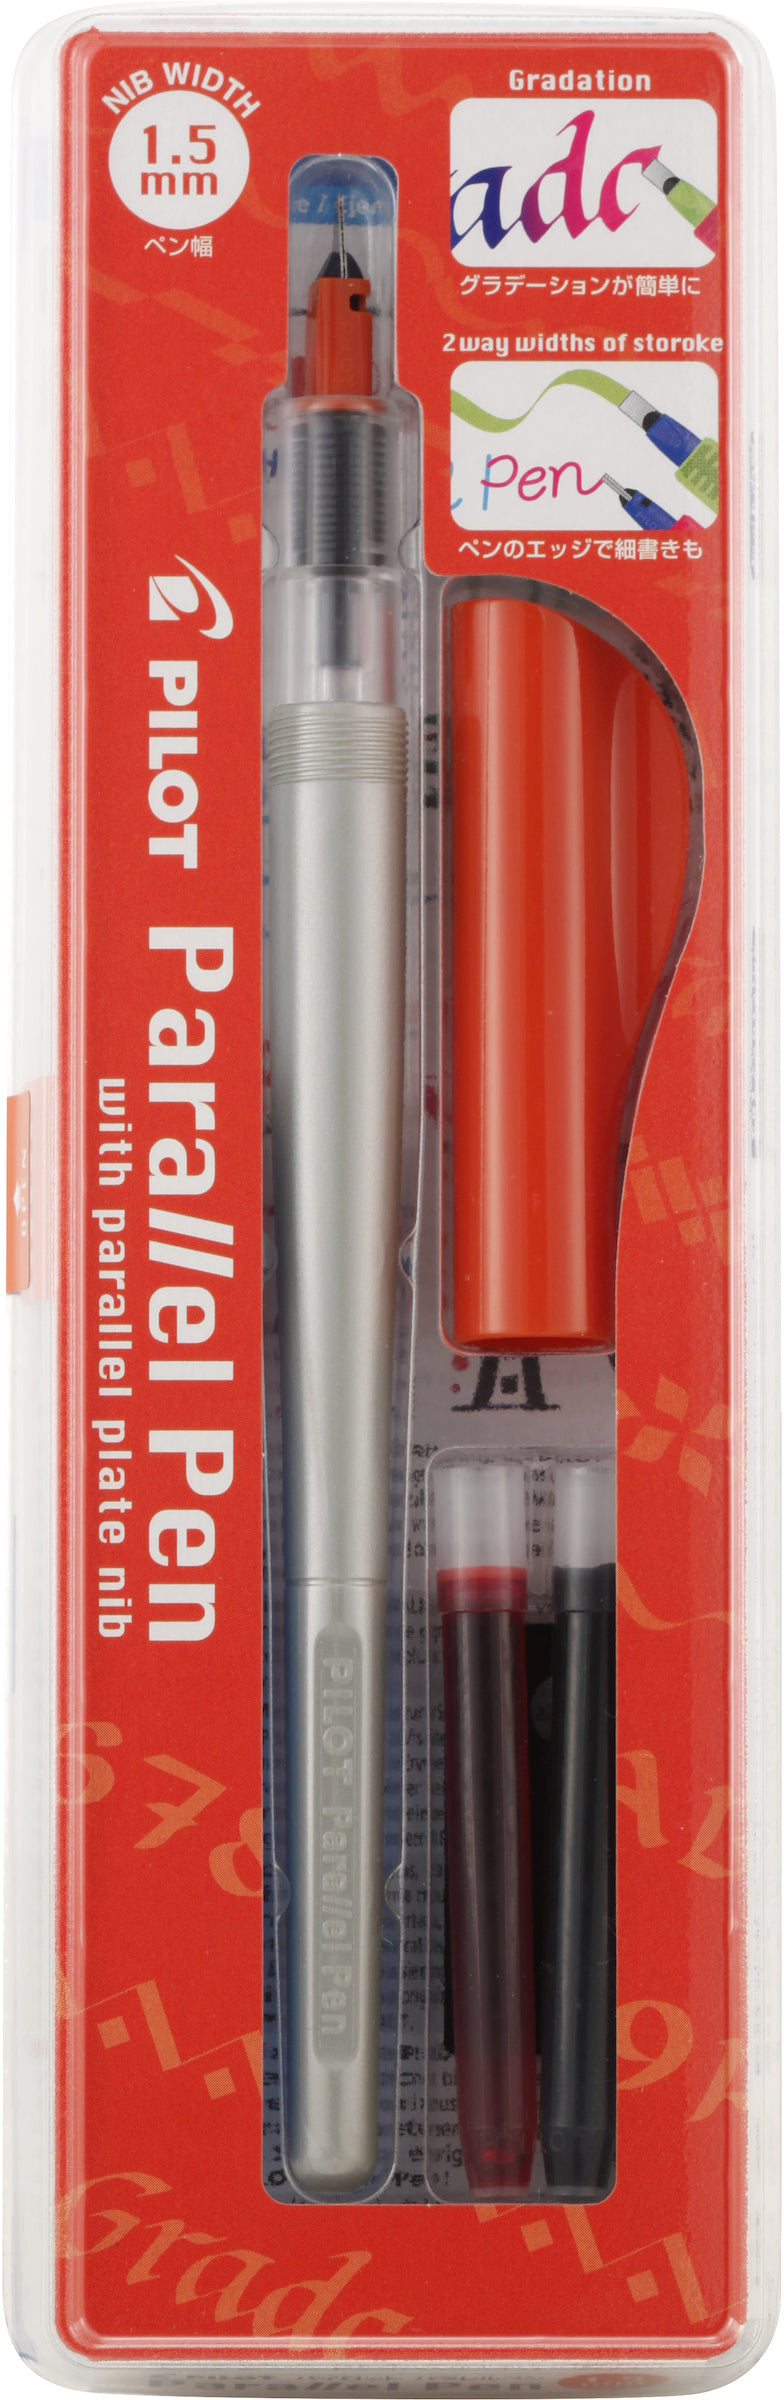 Set of 4 Pilot Parallel Calligraphy Pens 1.5, 2.4, 3.8, 6.0 mm